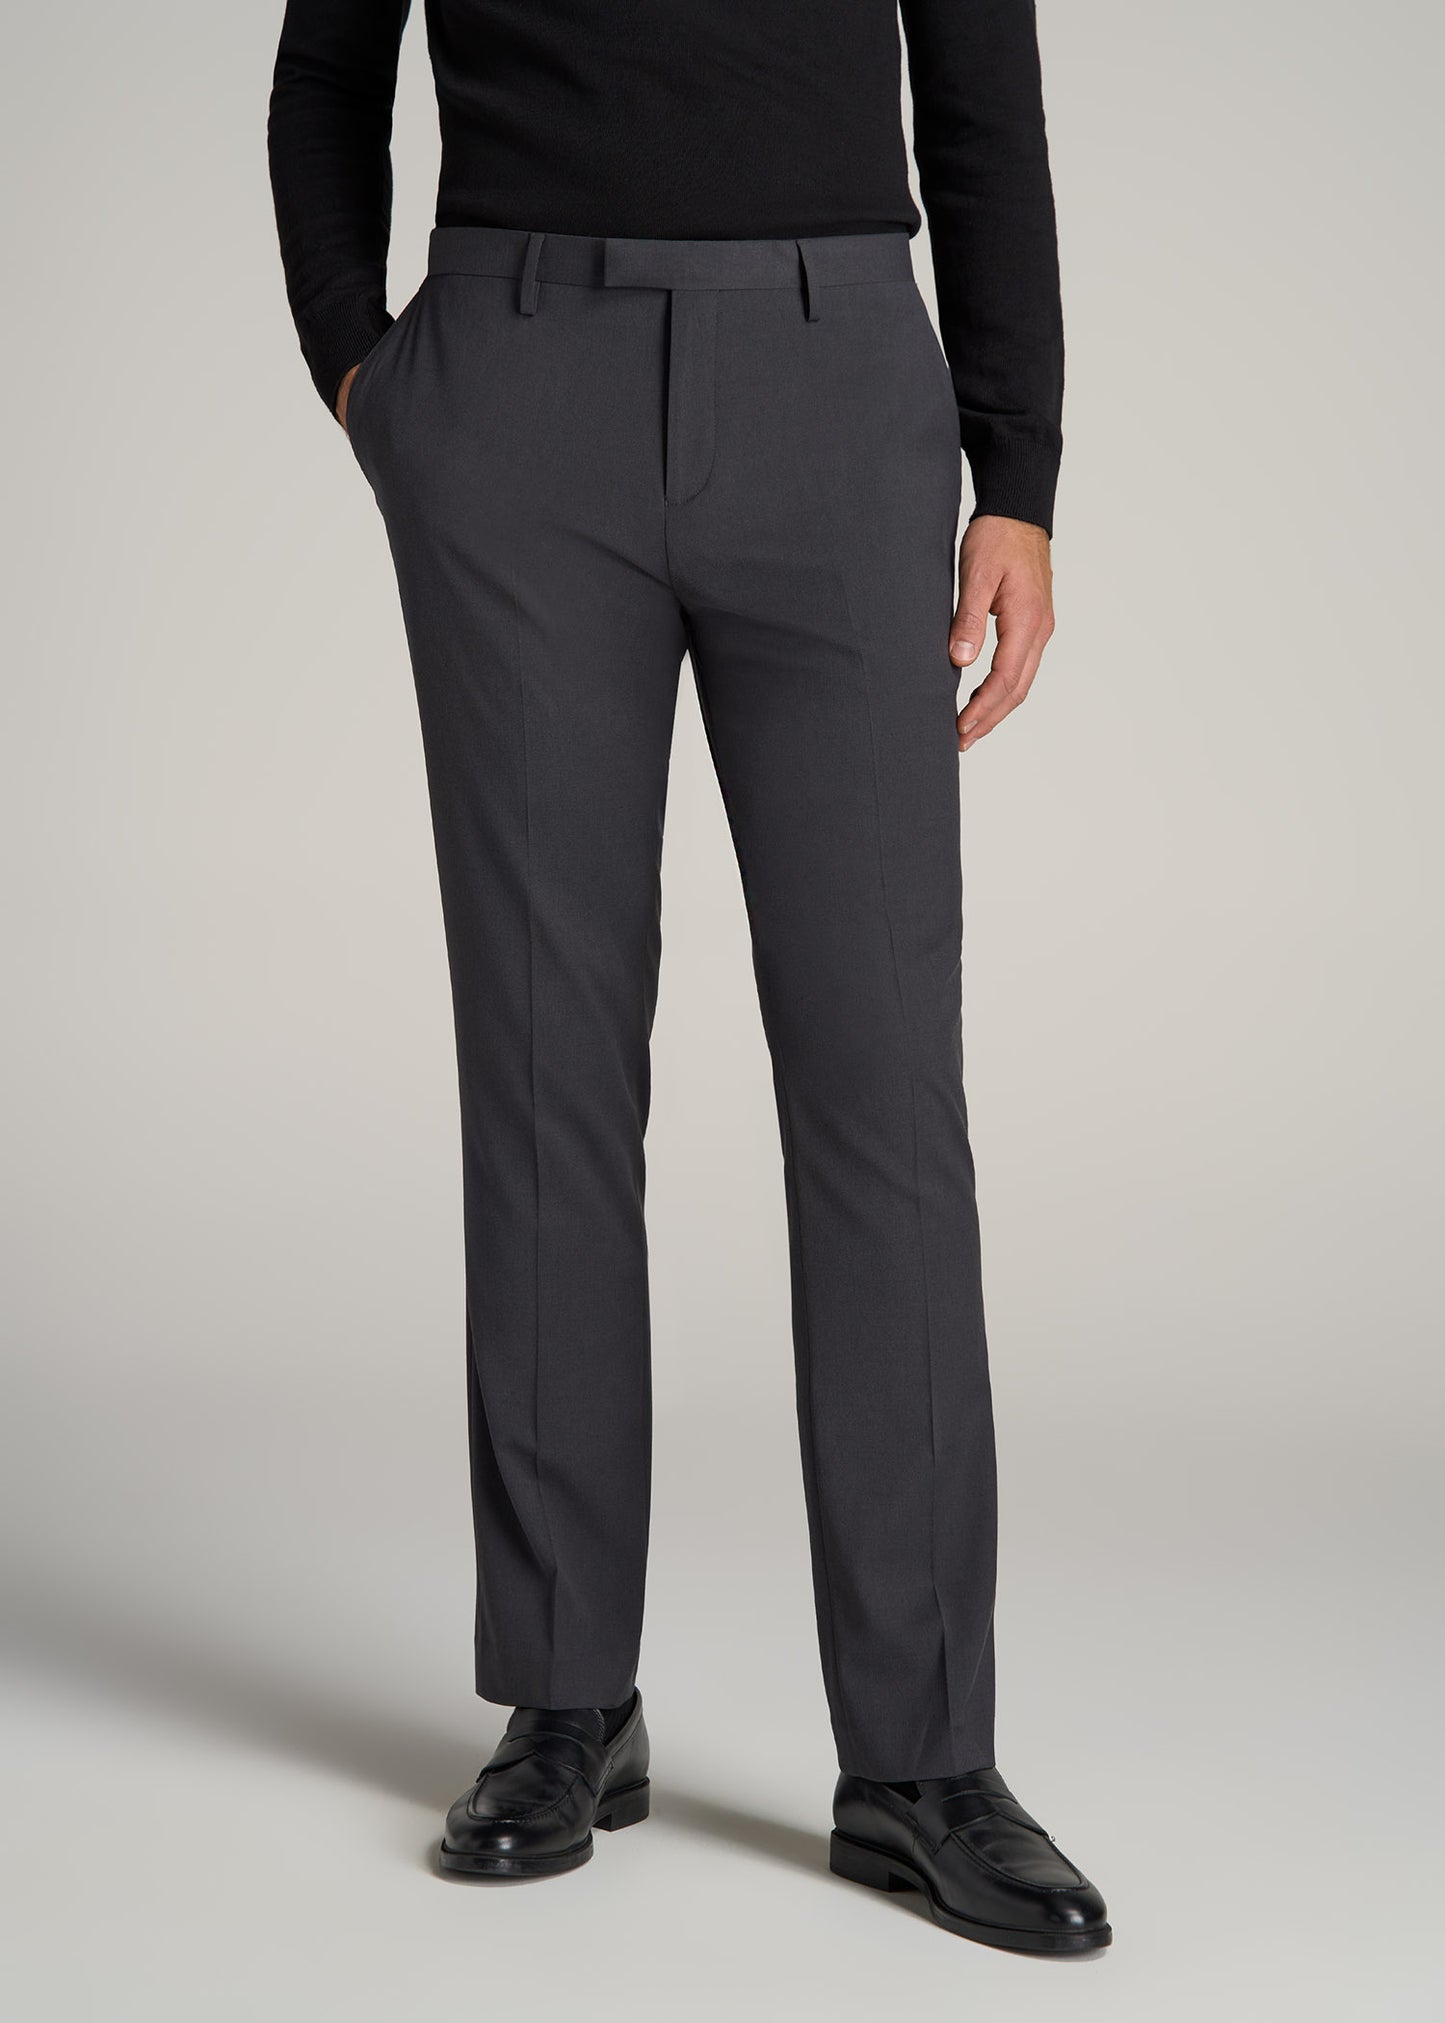 Buy Men Navy Check Ultra Slim Fit Trousers Online - 860641 | Van Heusen